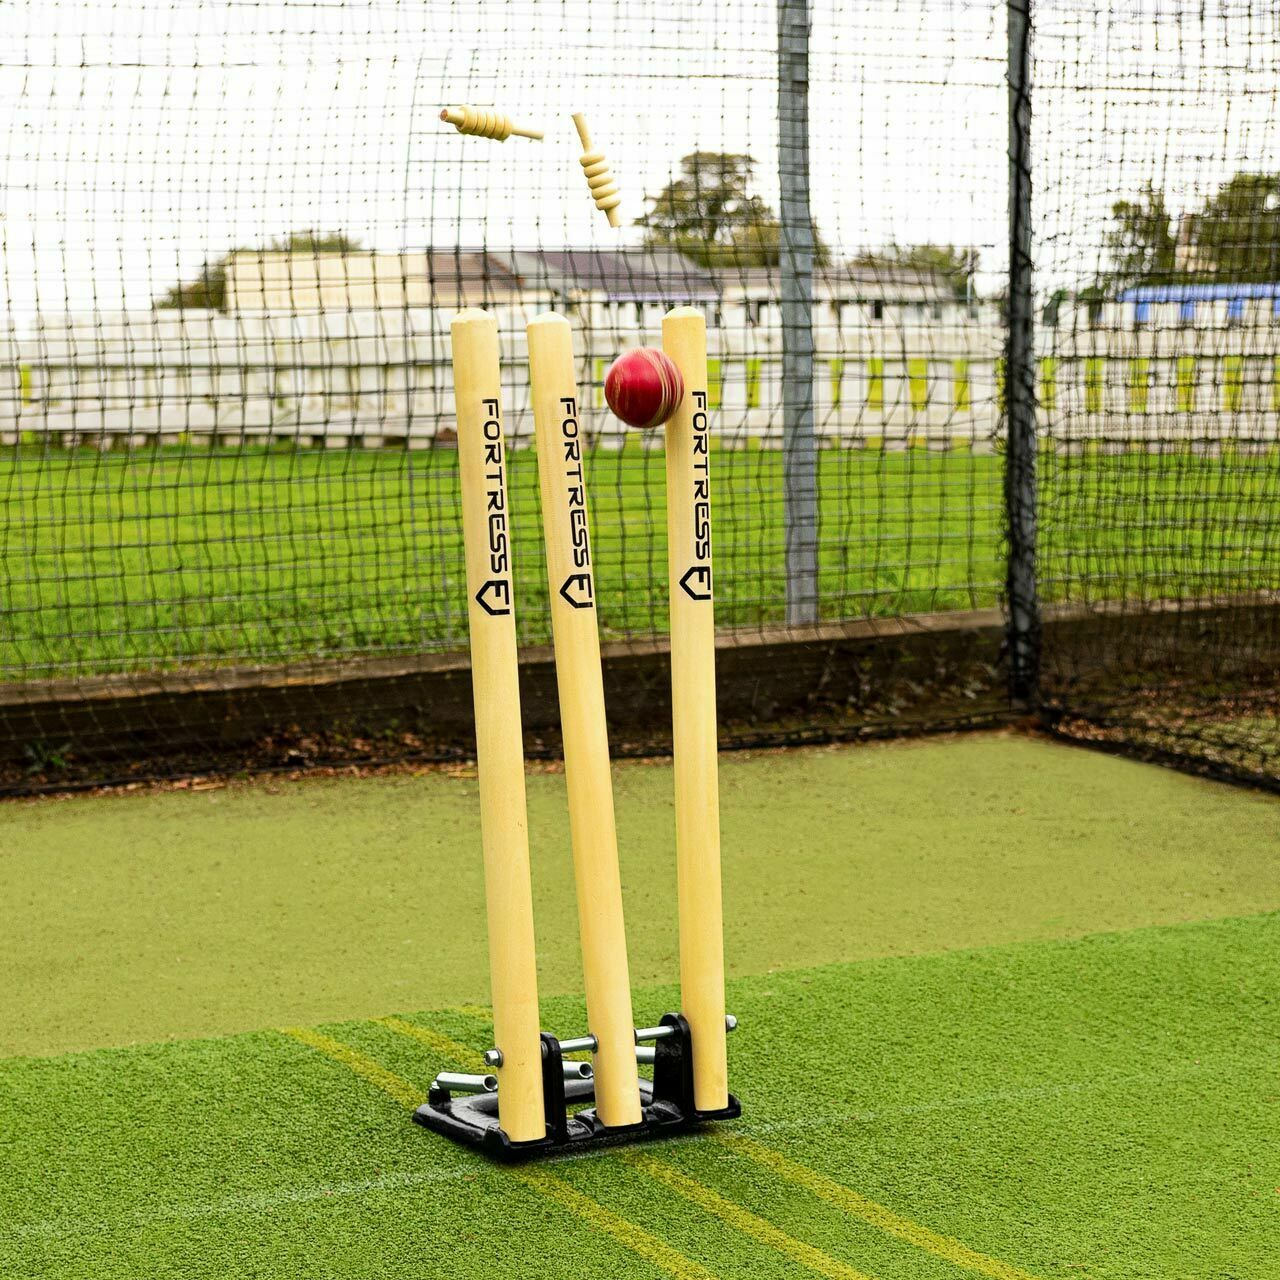 FORTRESS Spring Back Cricket Stumps [Regulation]. Wooden Stumps + Bails 5060272564674. eBay. Cricket equipment, Cricket stumps, Stumped